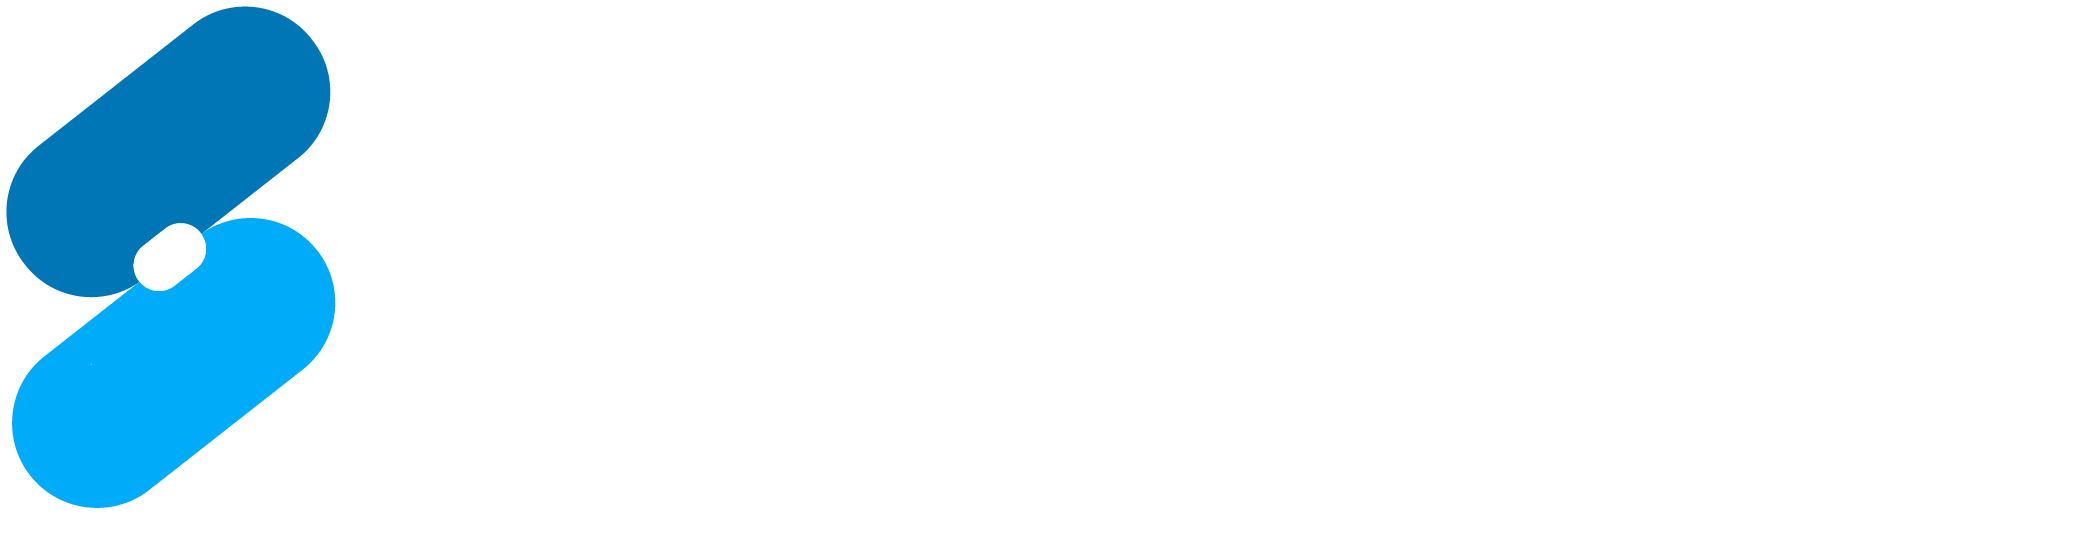 Logo Solfi